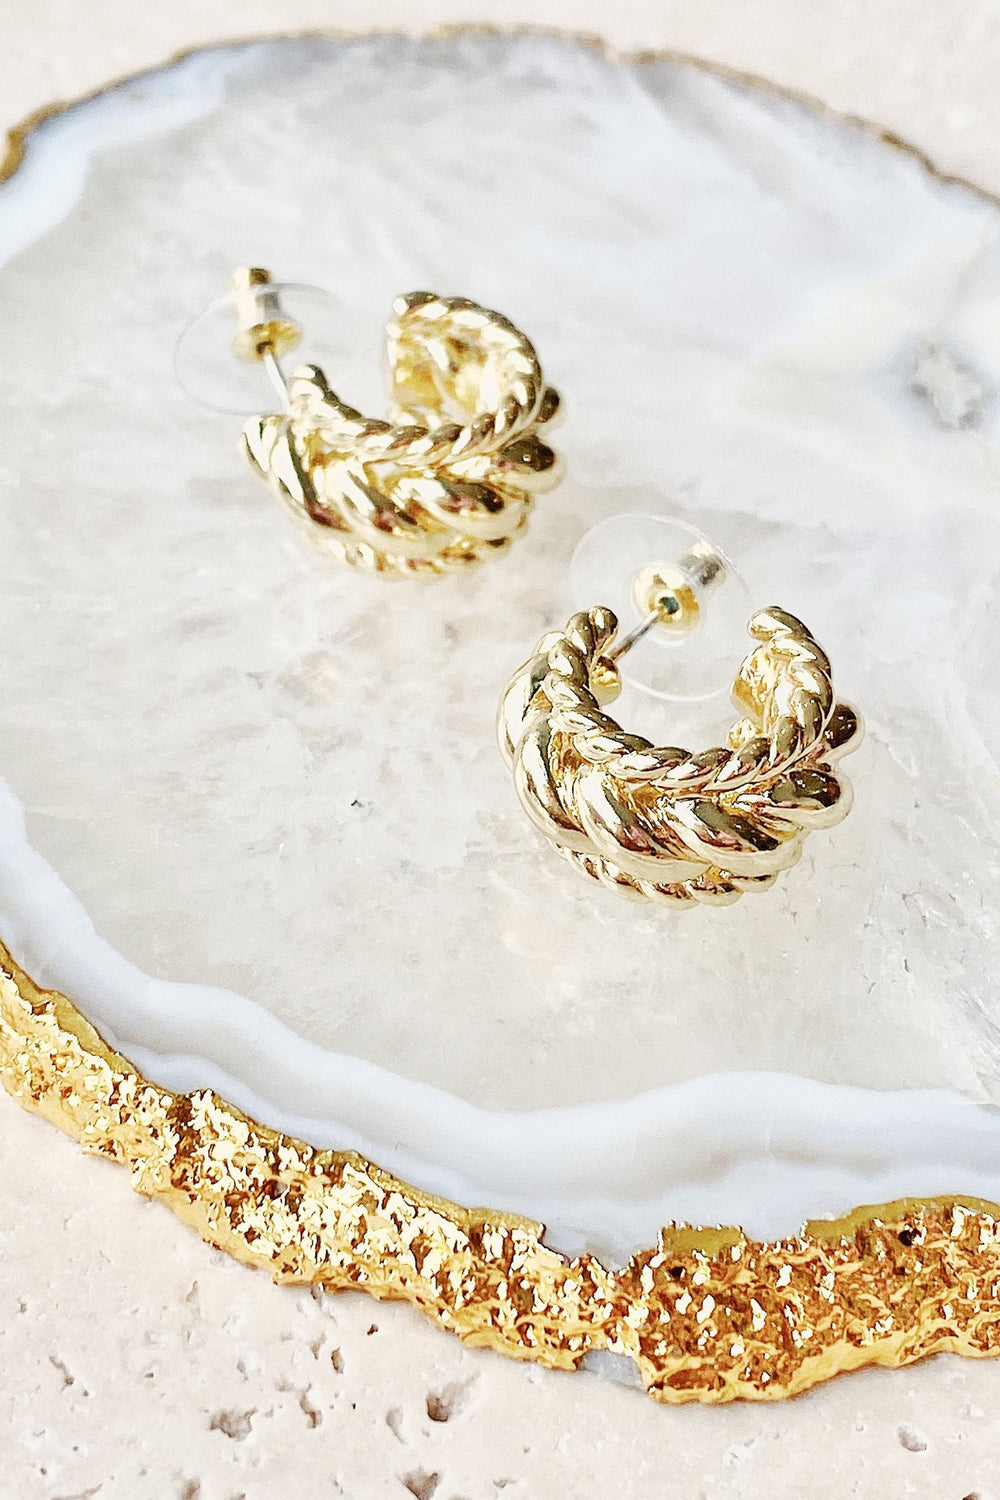 Rendira Gold Mini Earrings